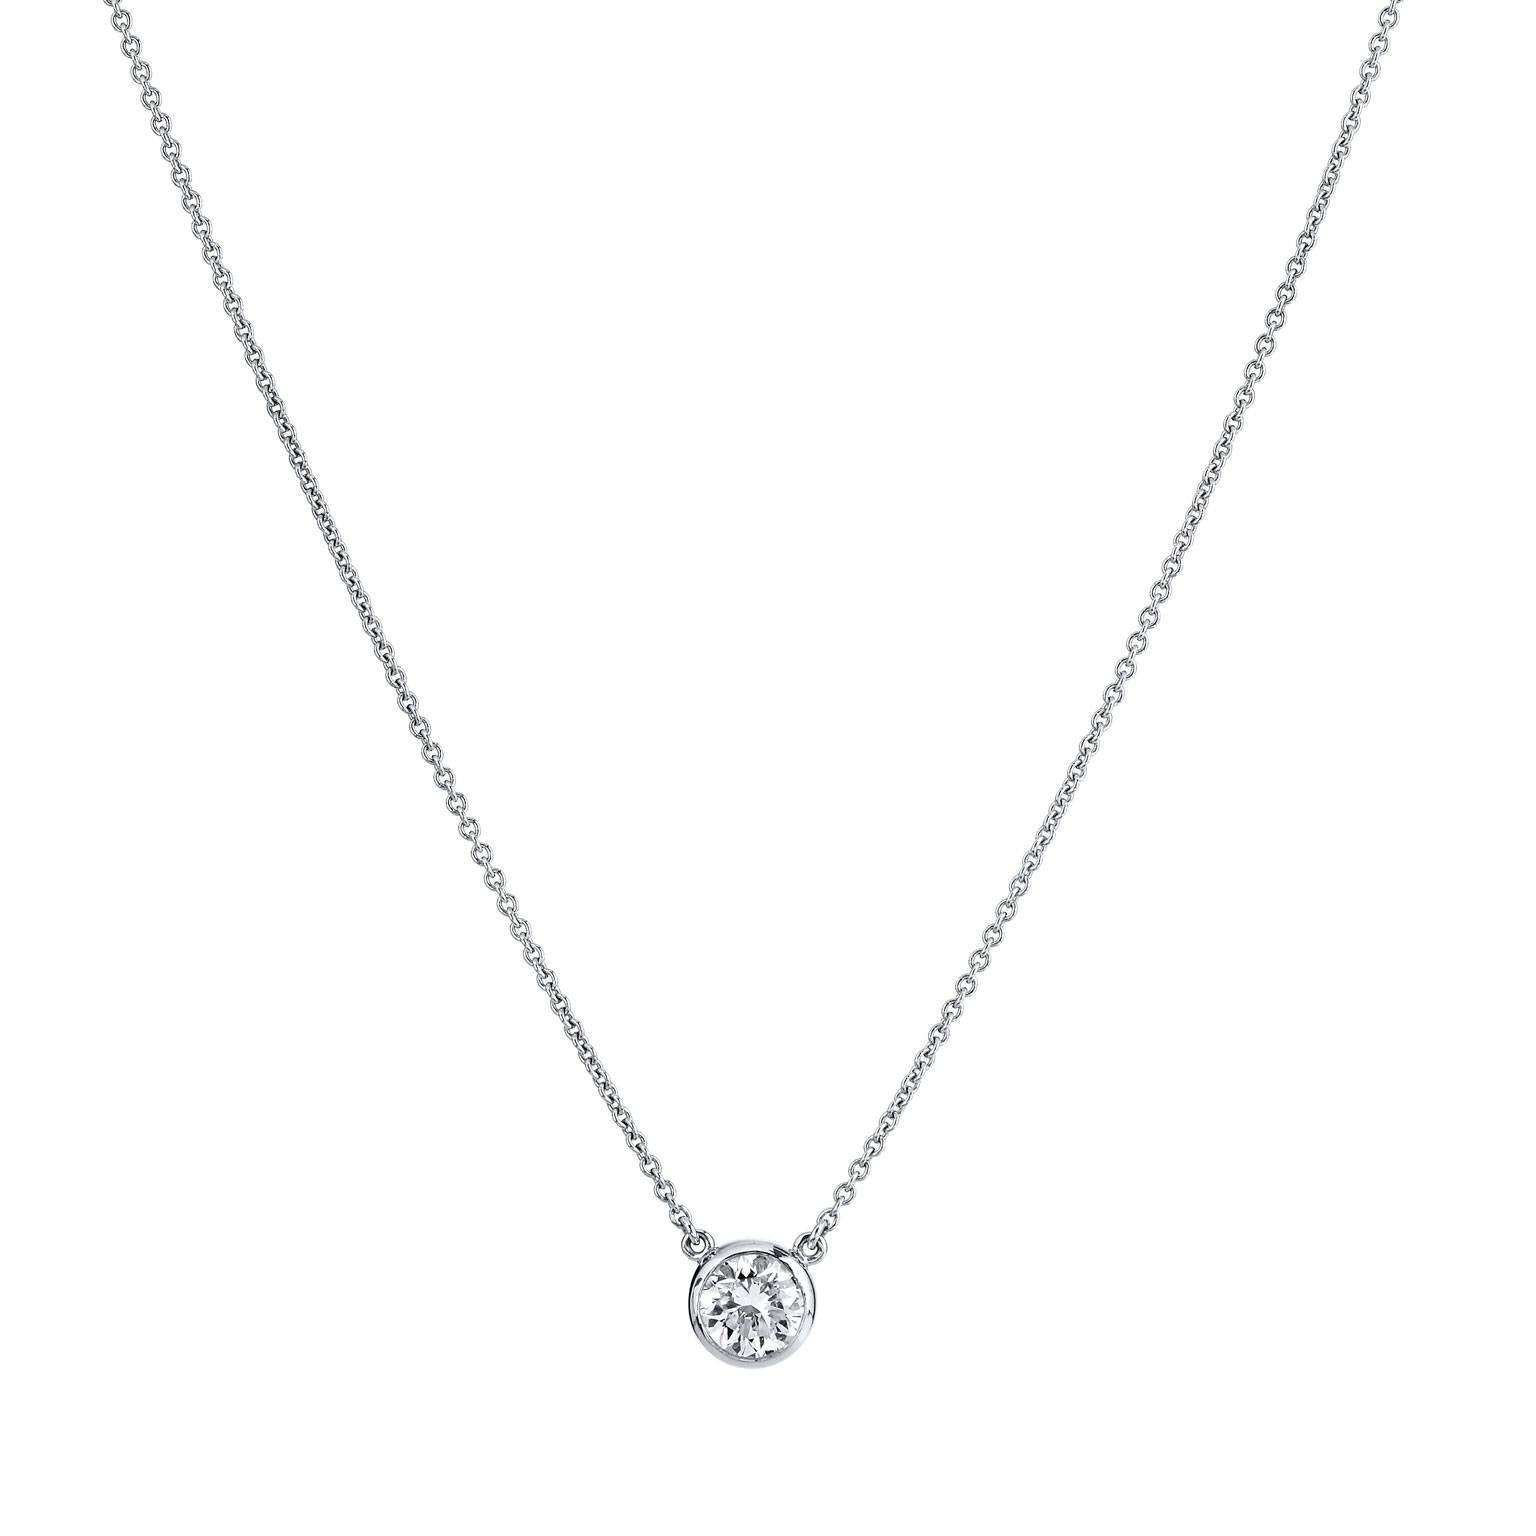 H & H Minimal 1.01 Carat Diamond Solitaire White Gold Pendant Necklace